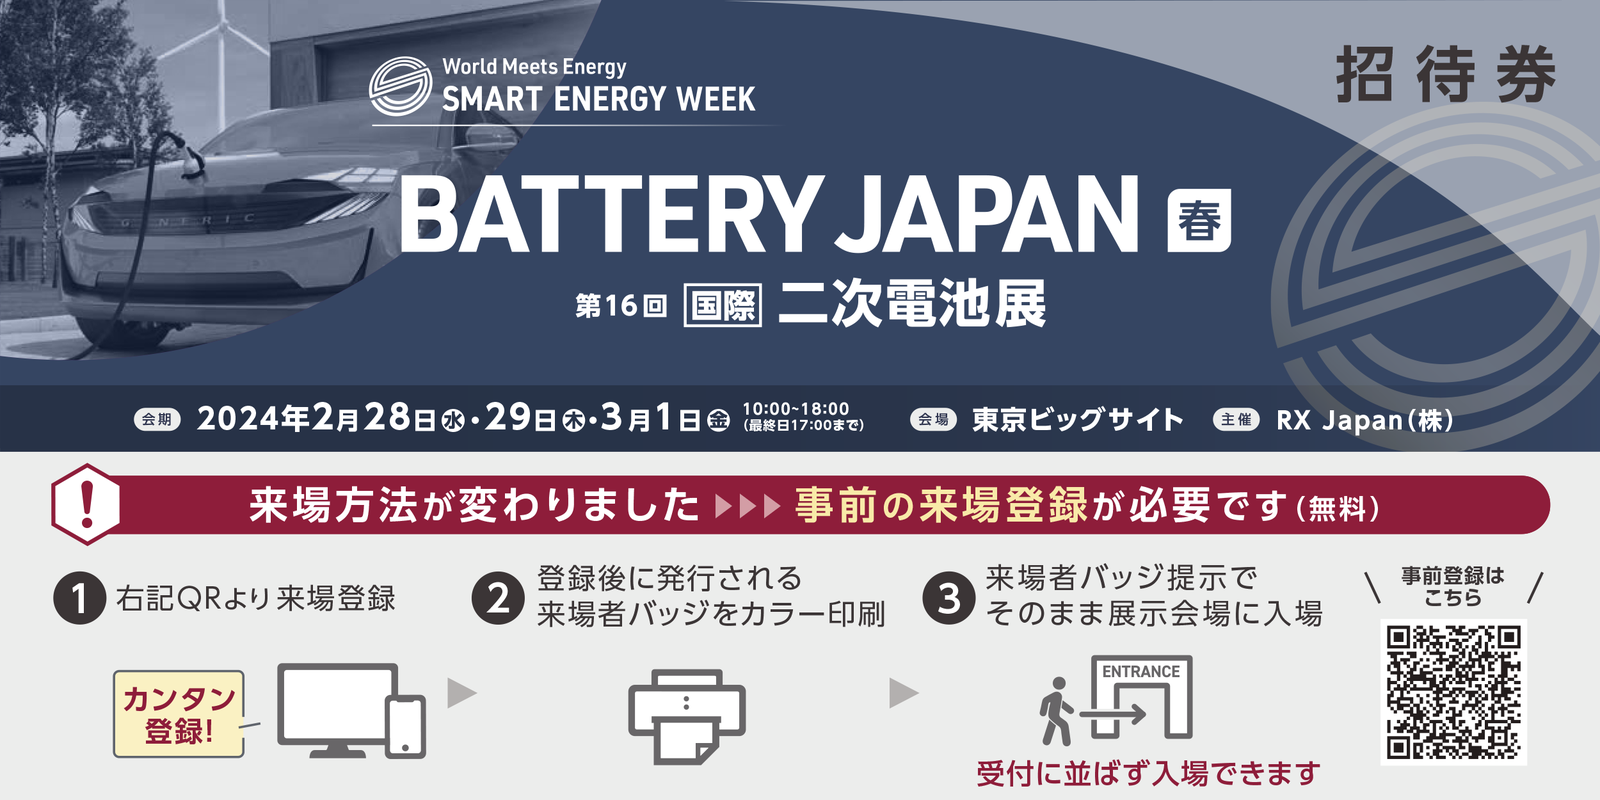 BATTERY JAPAN 二次電池「春」には来場登録が必須となります